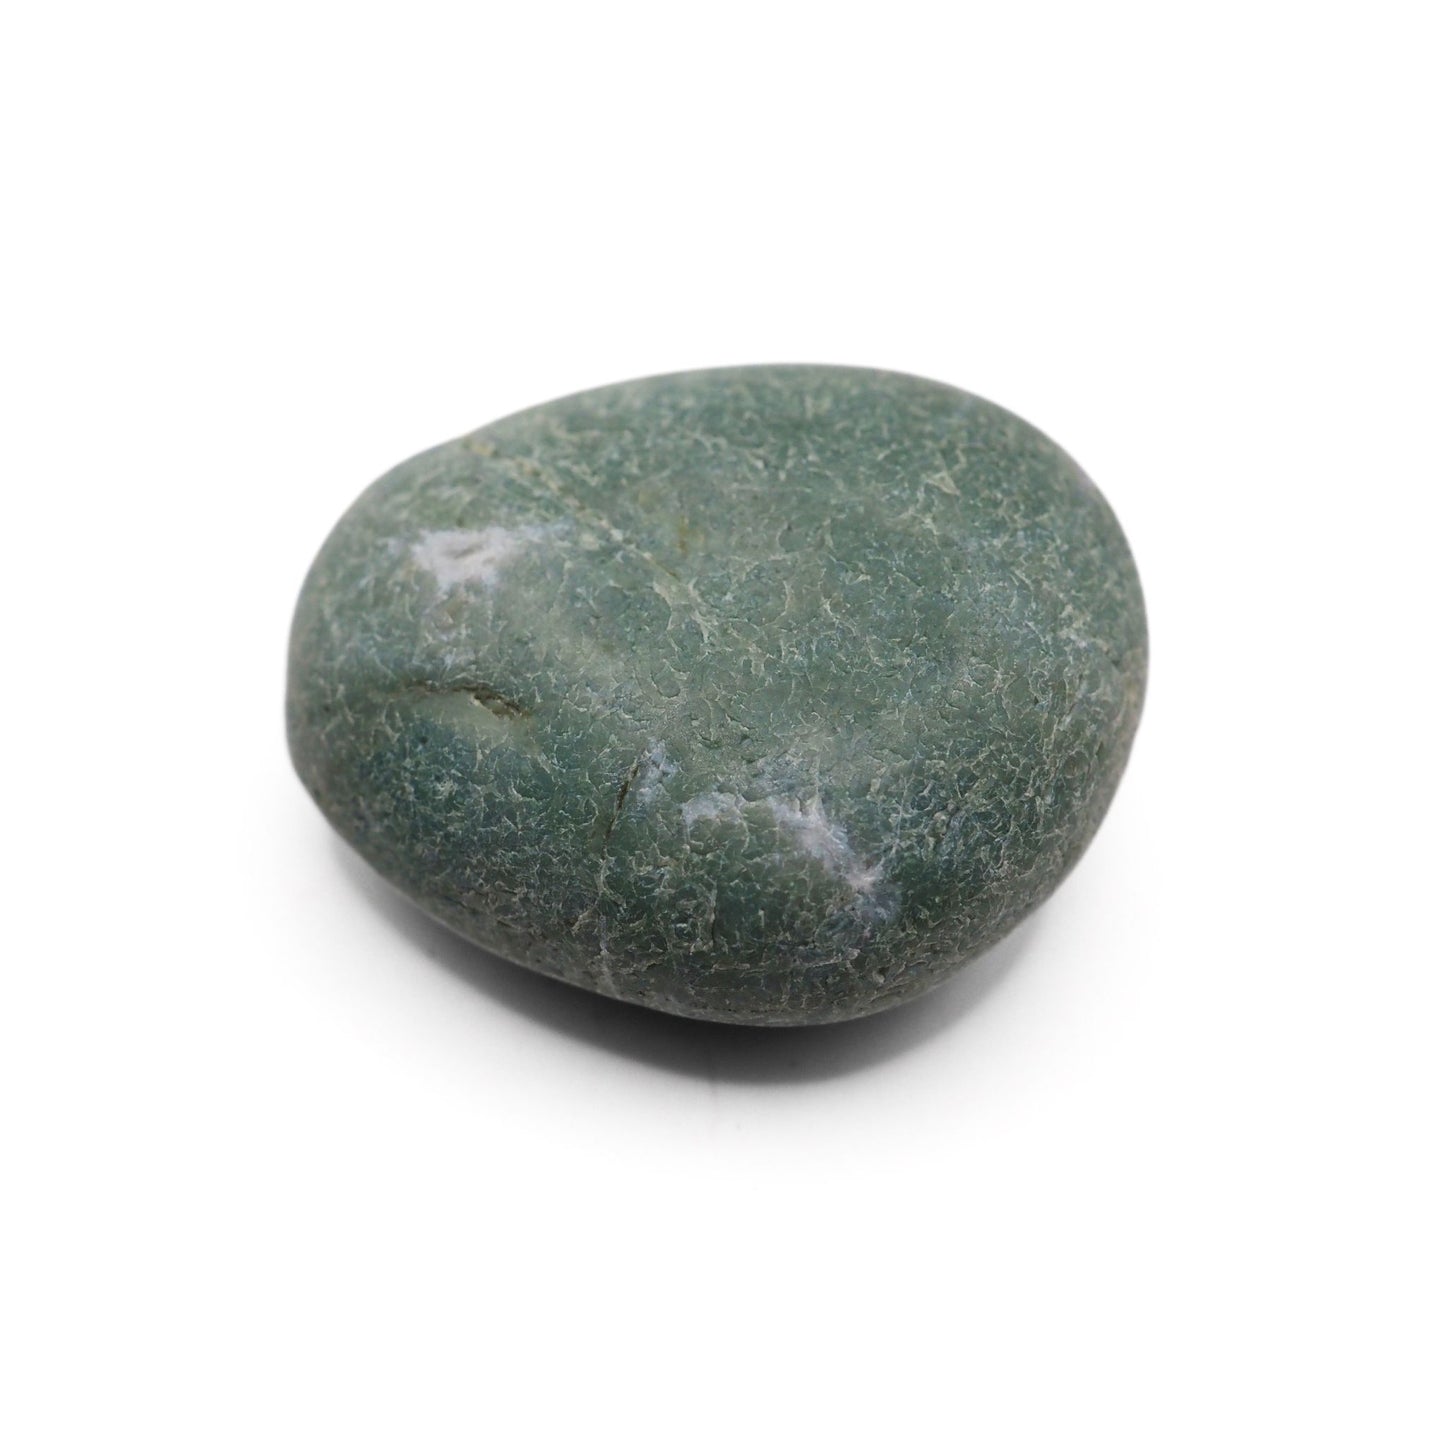 Side view of green Jasper palm stone